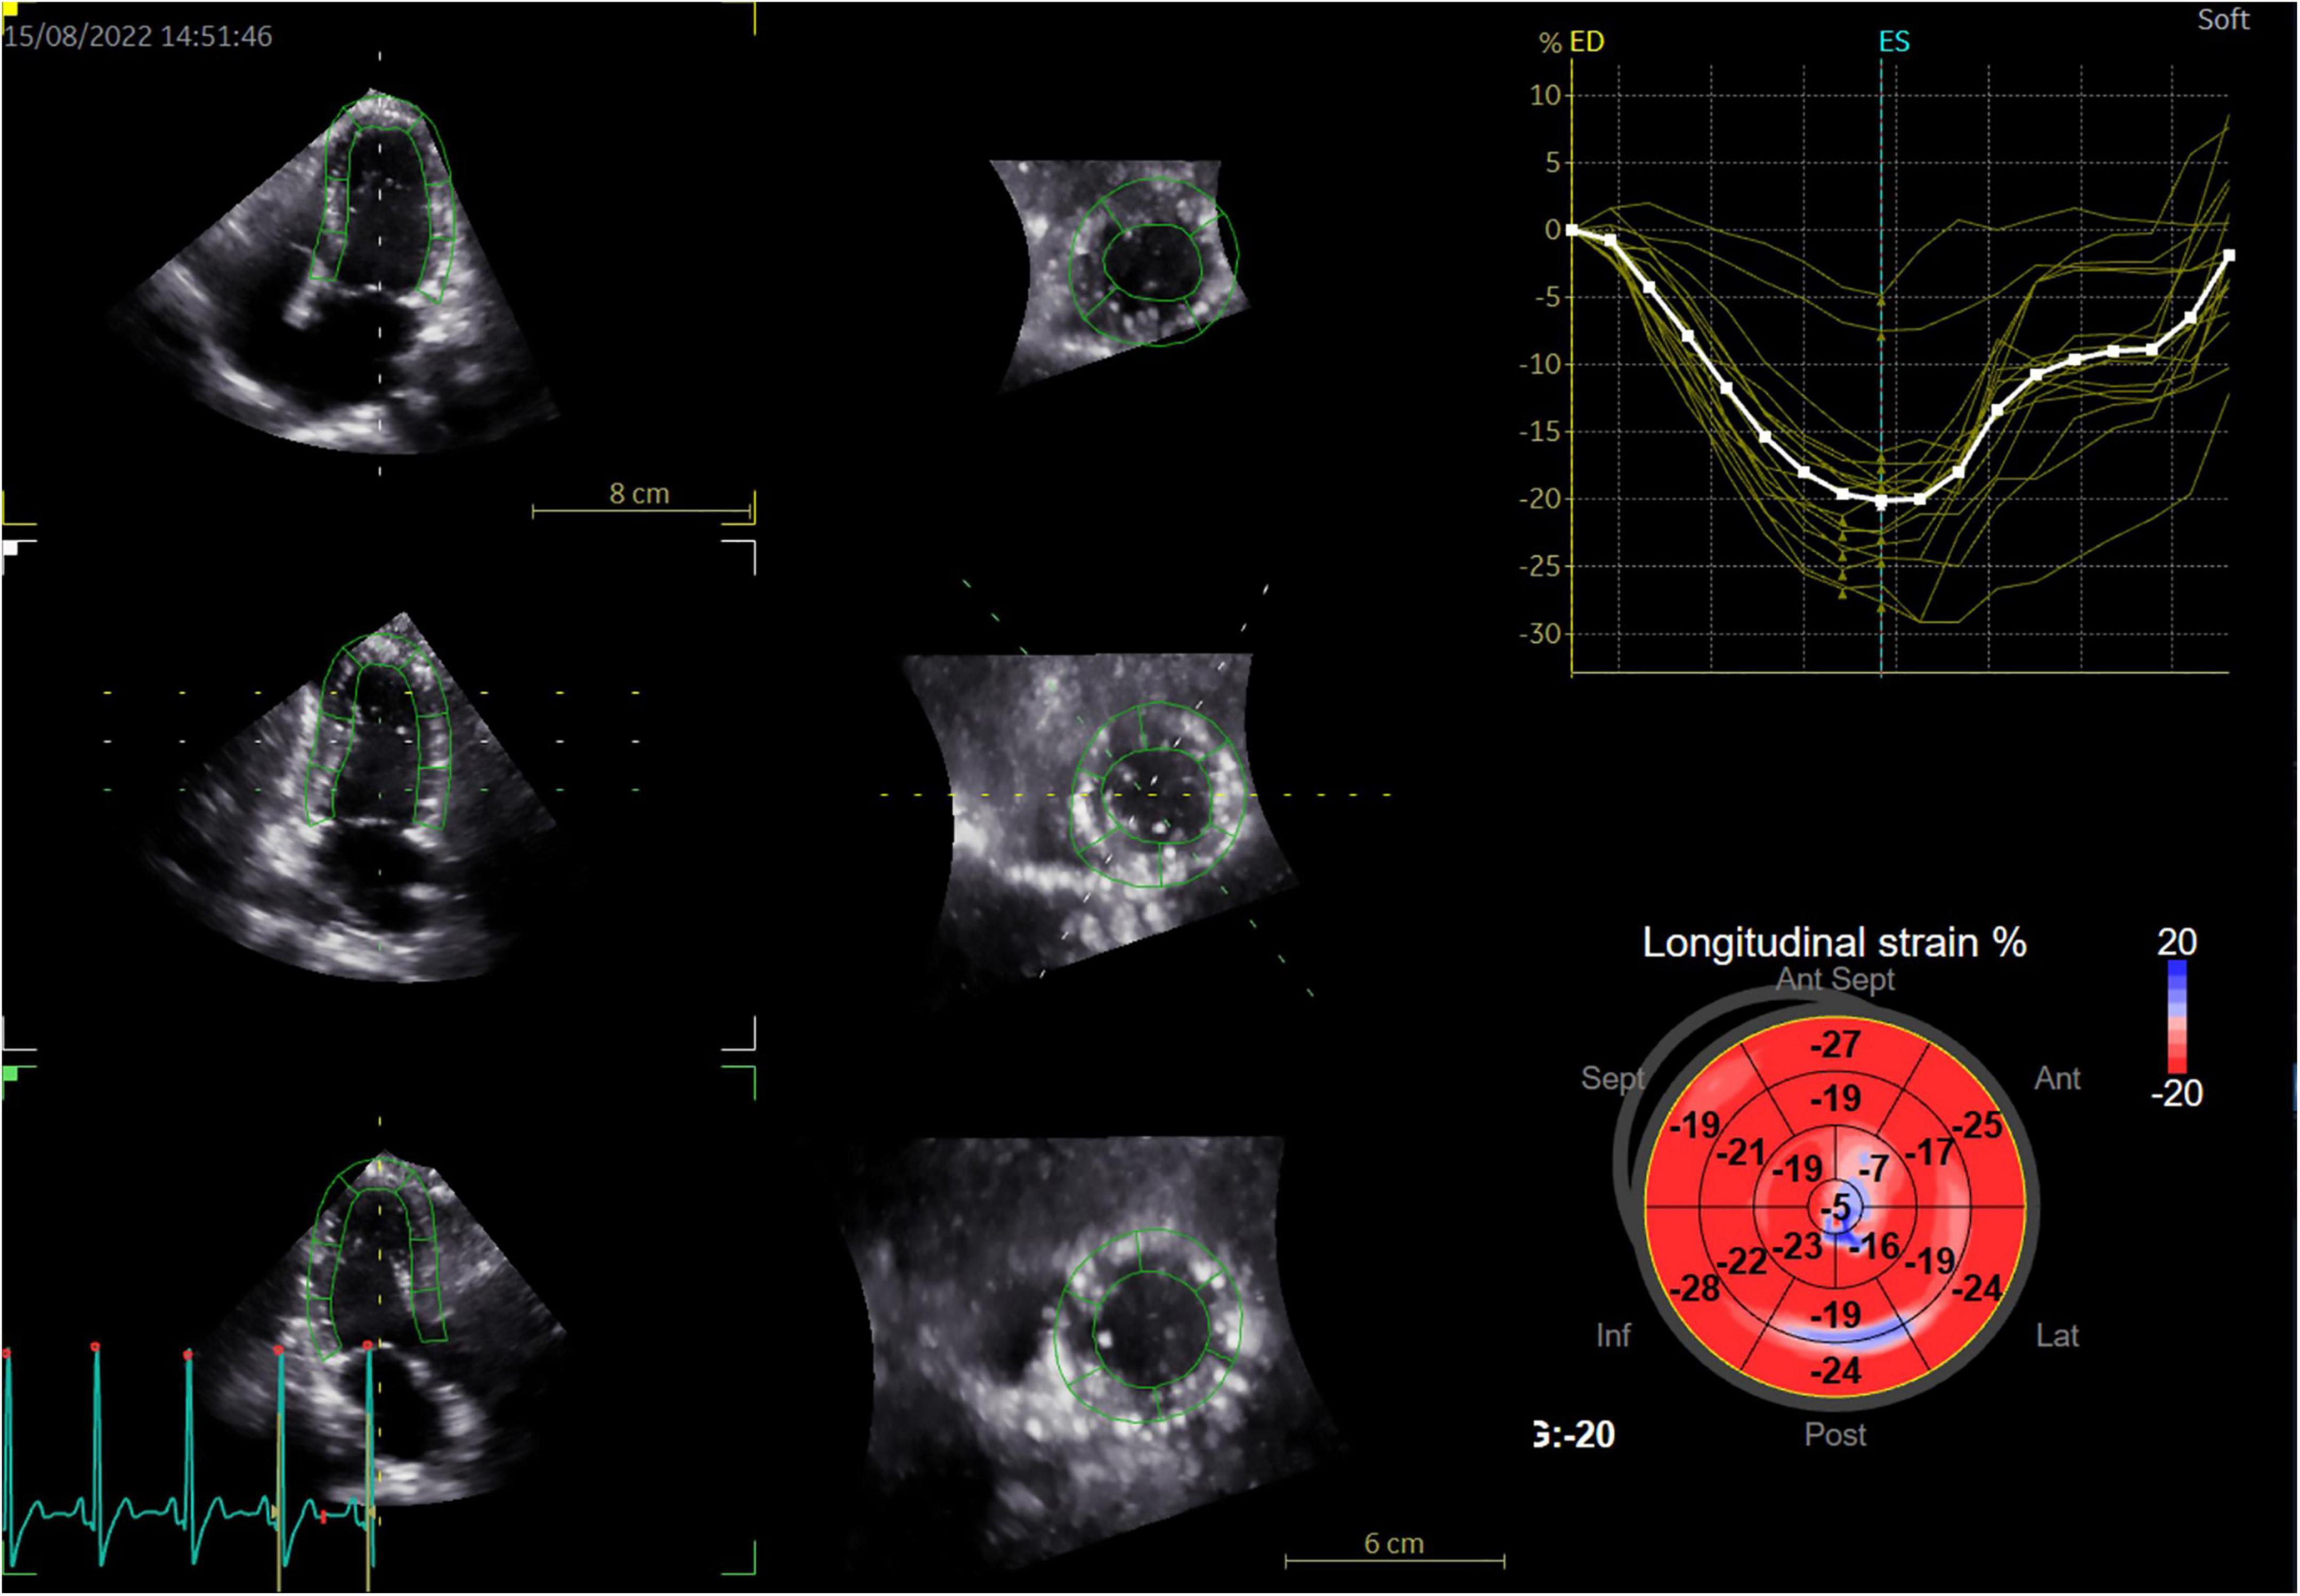 Interpreting the bull's-eye plot in speckle tracking echocardiogr